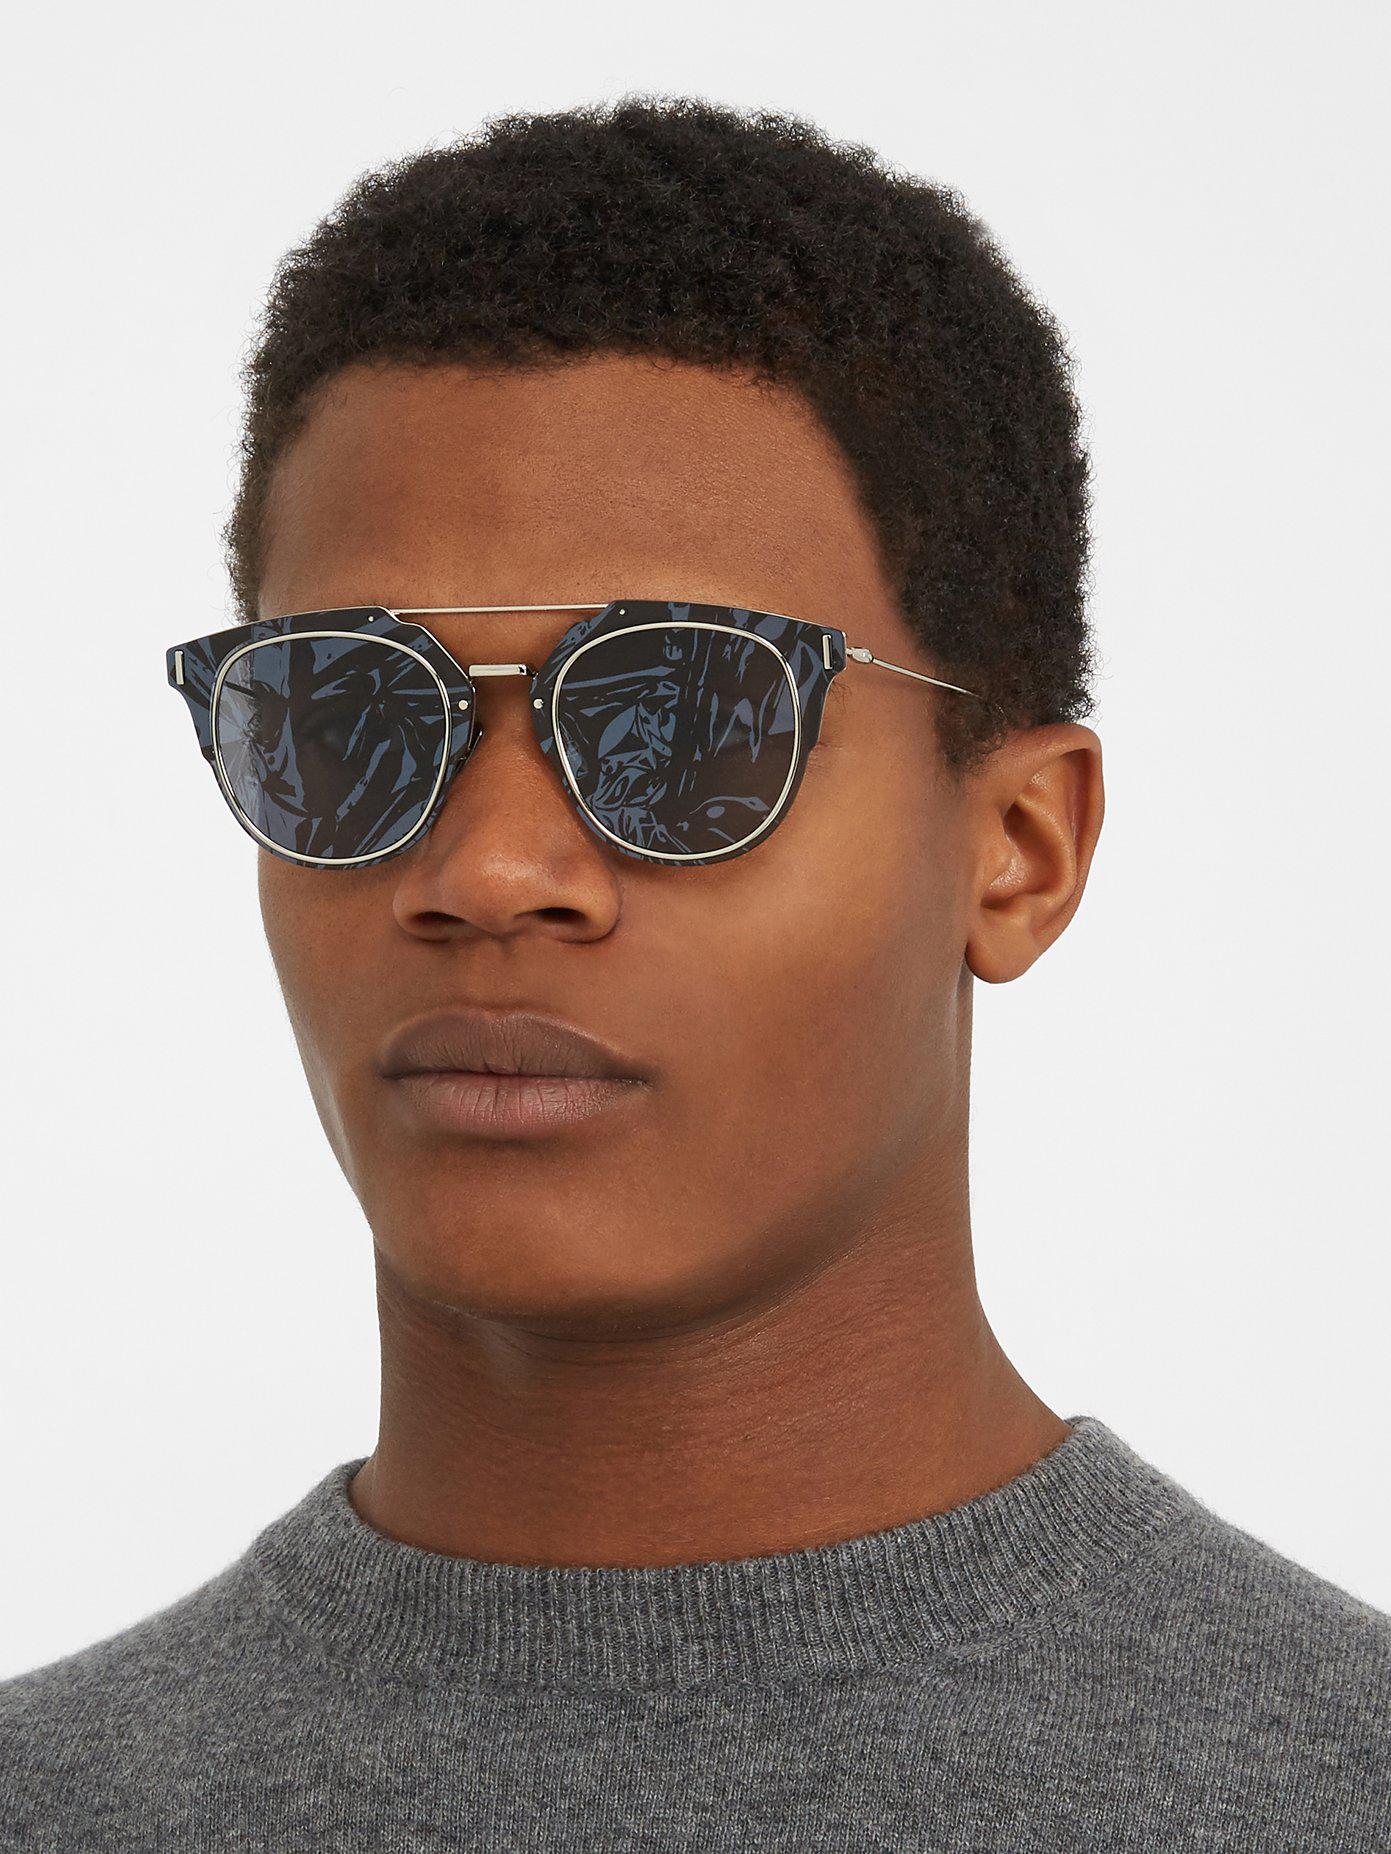 dior homme composit 1.0 sunglasses